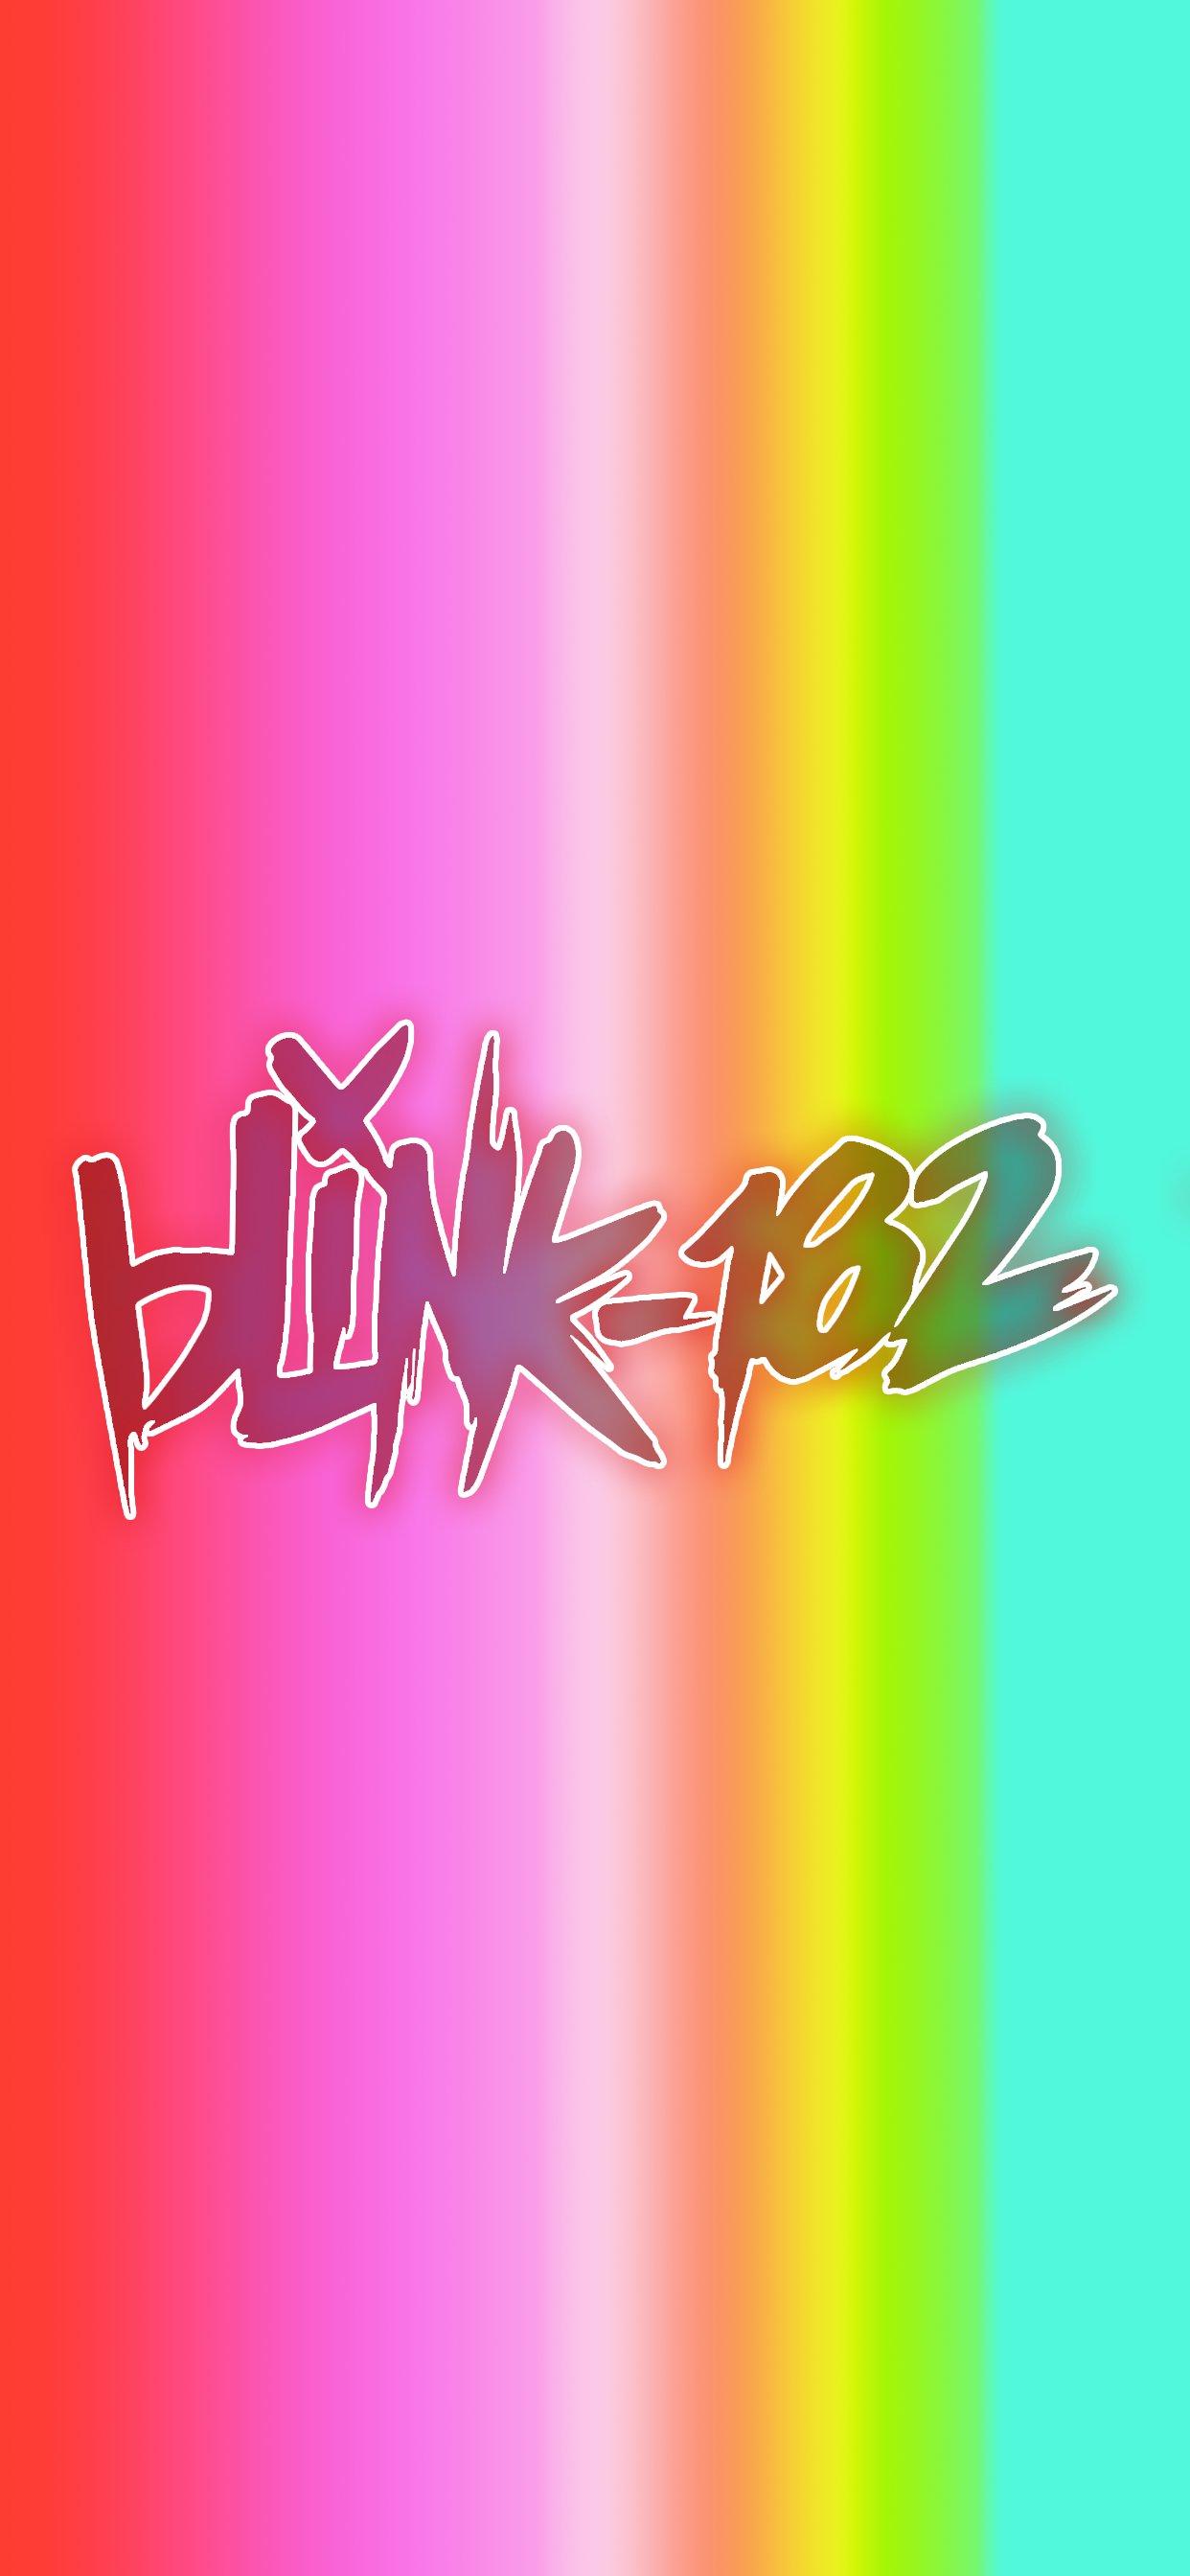 Blink 182 Wallpapers